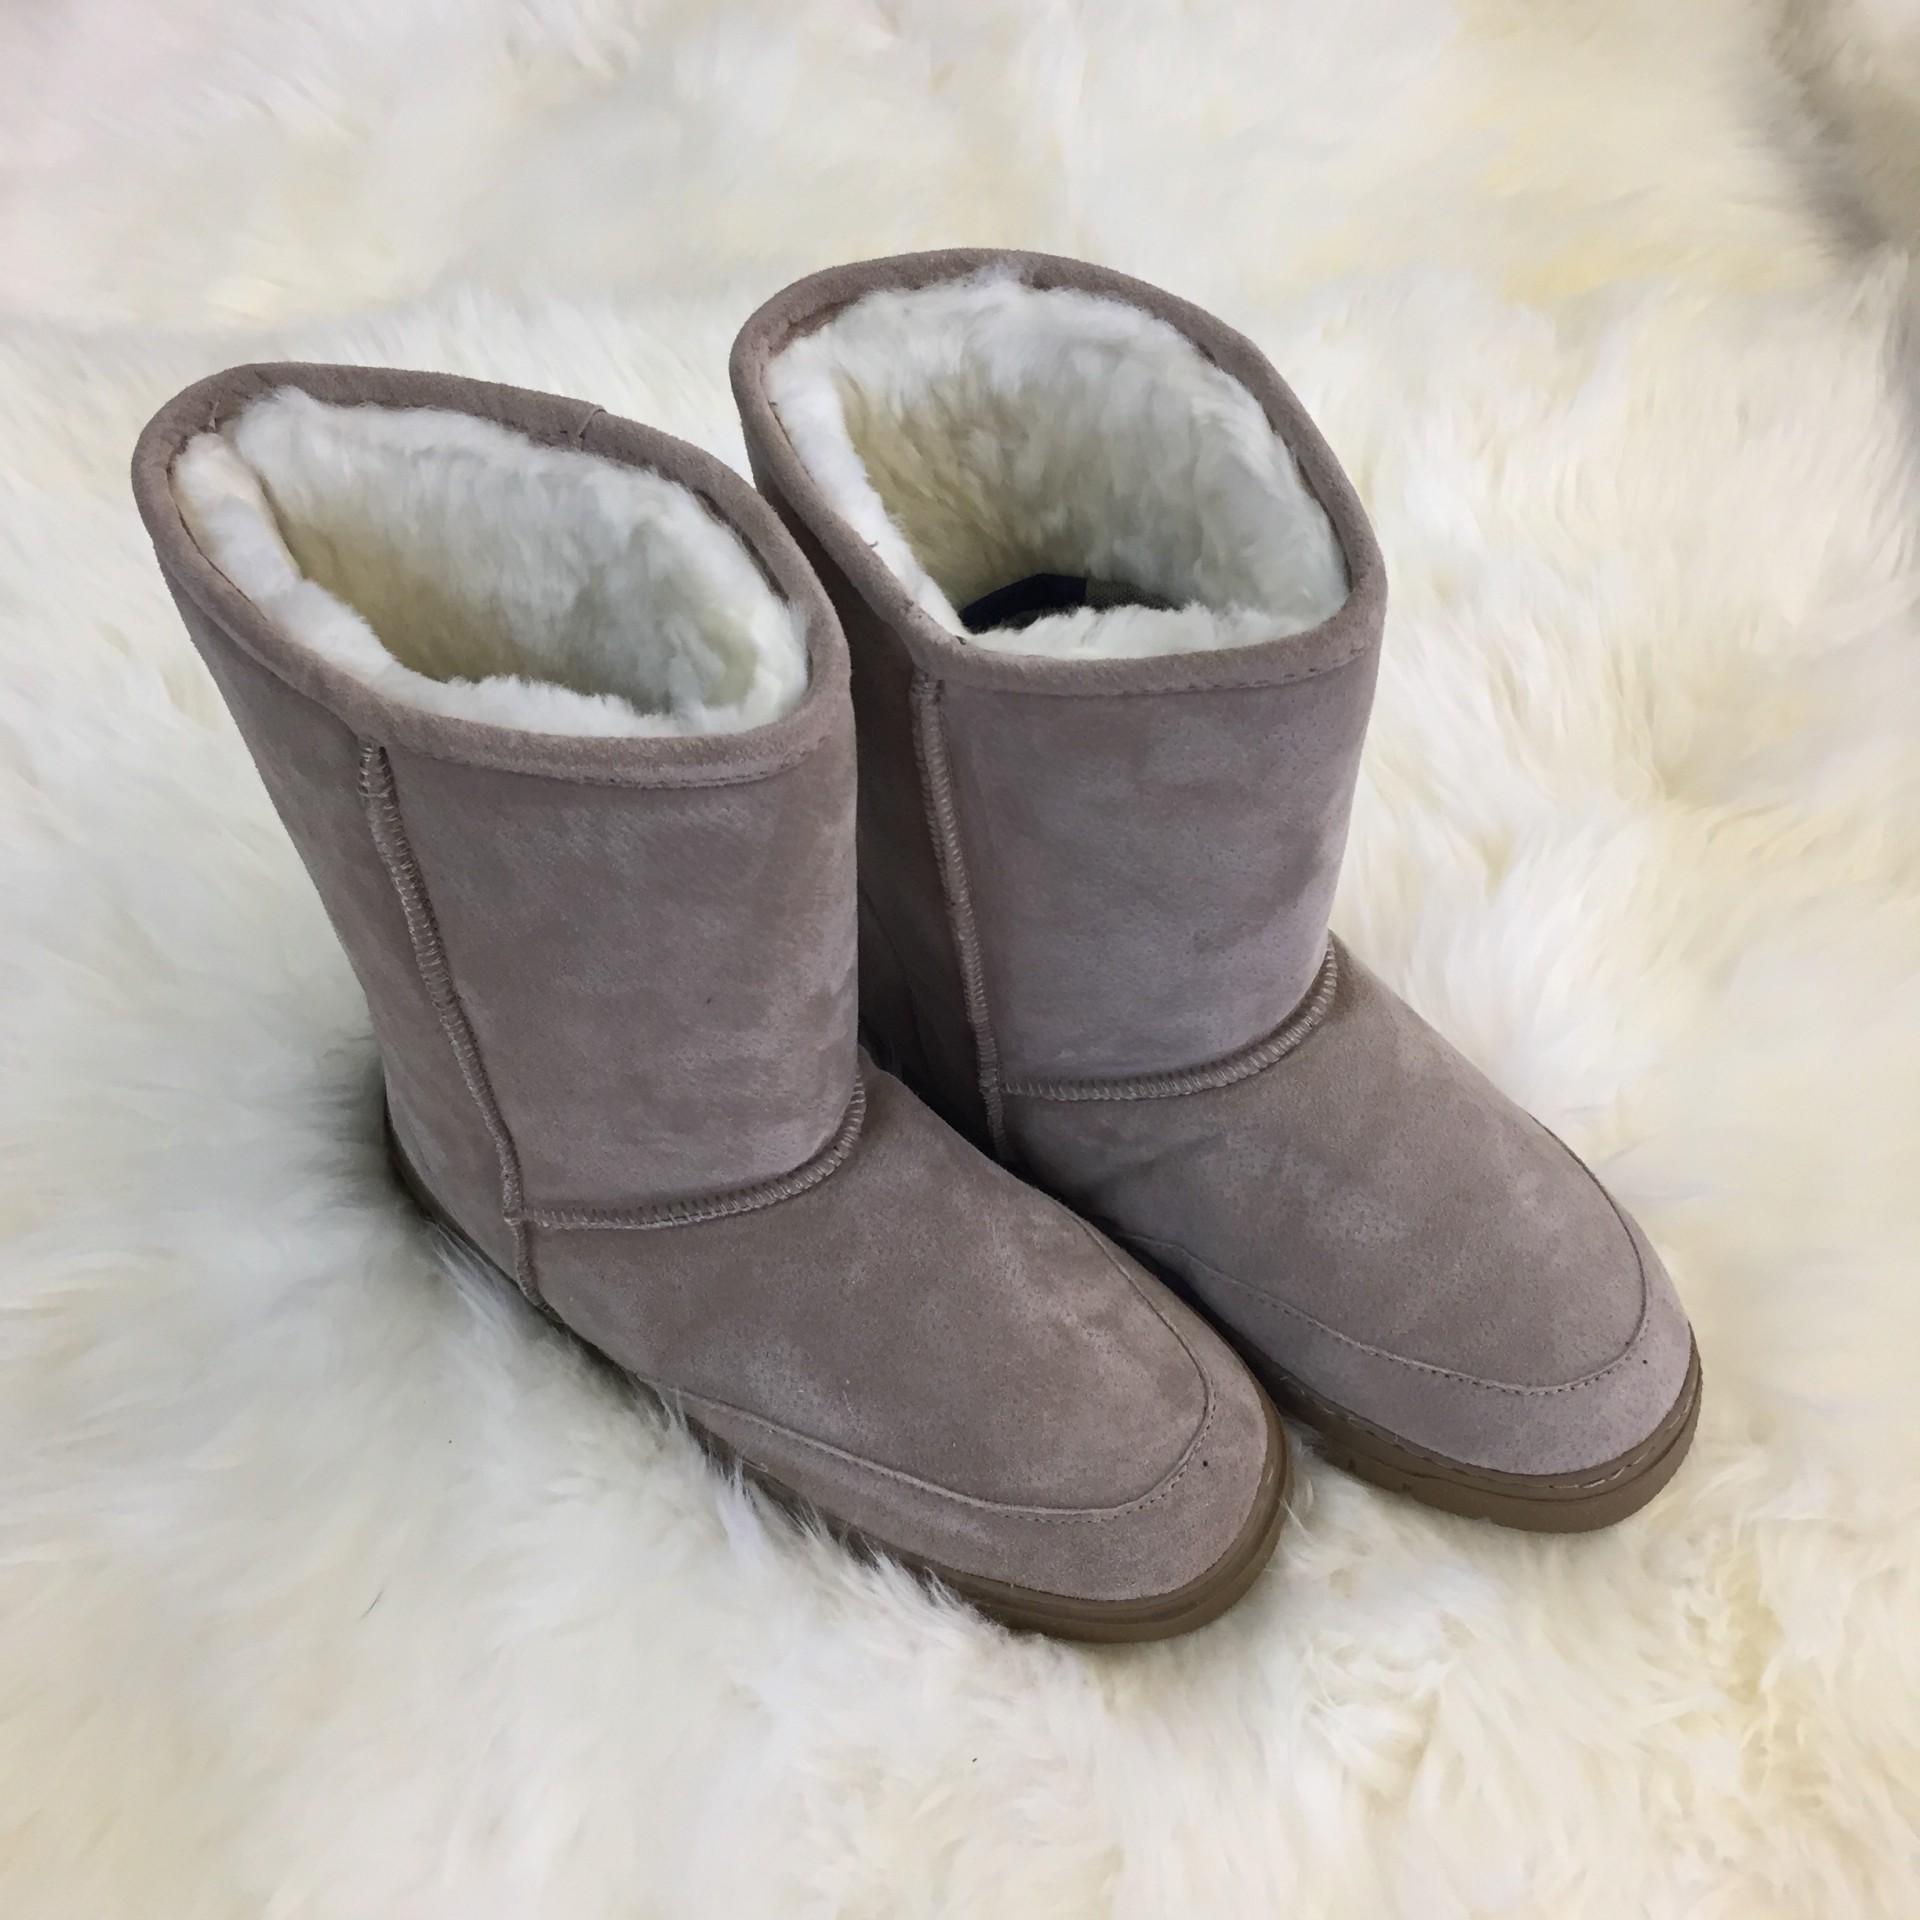 Buy > sheepskin ladies boots > in stock